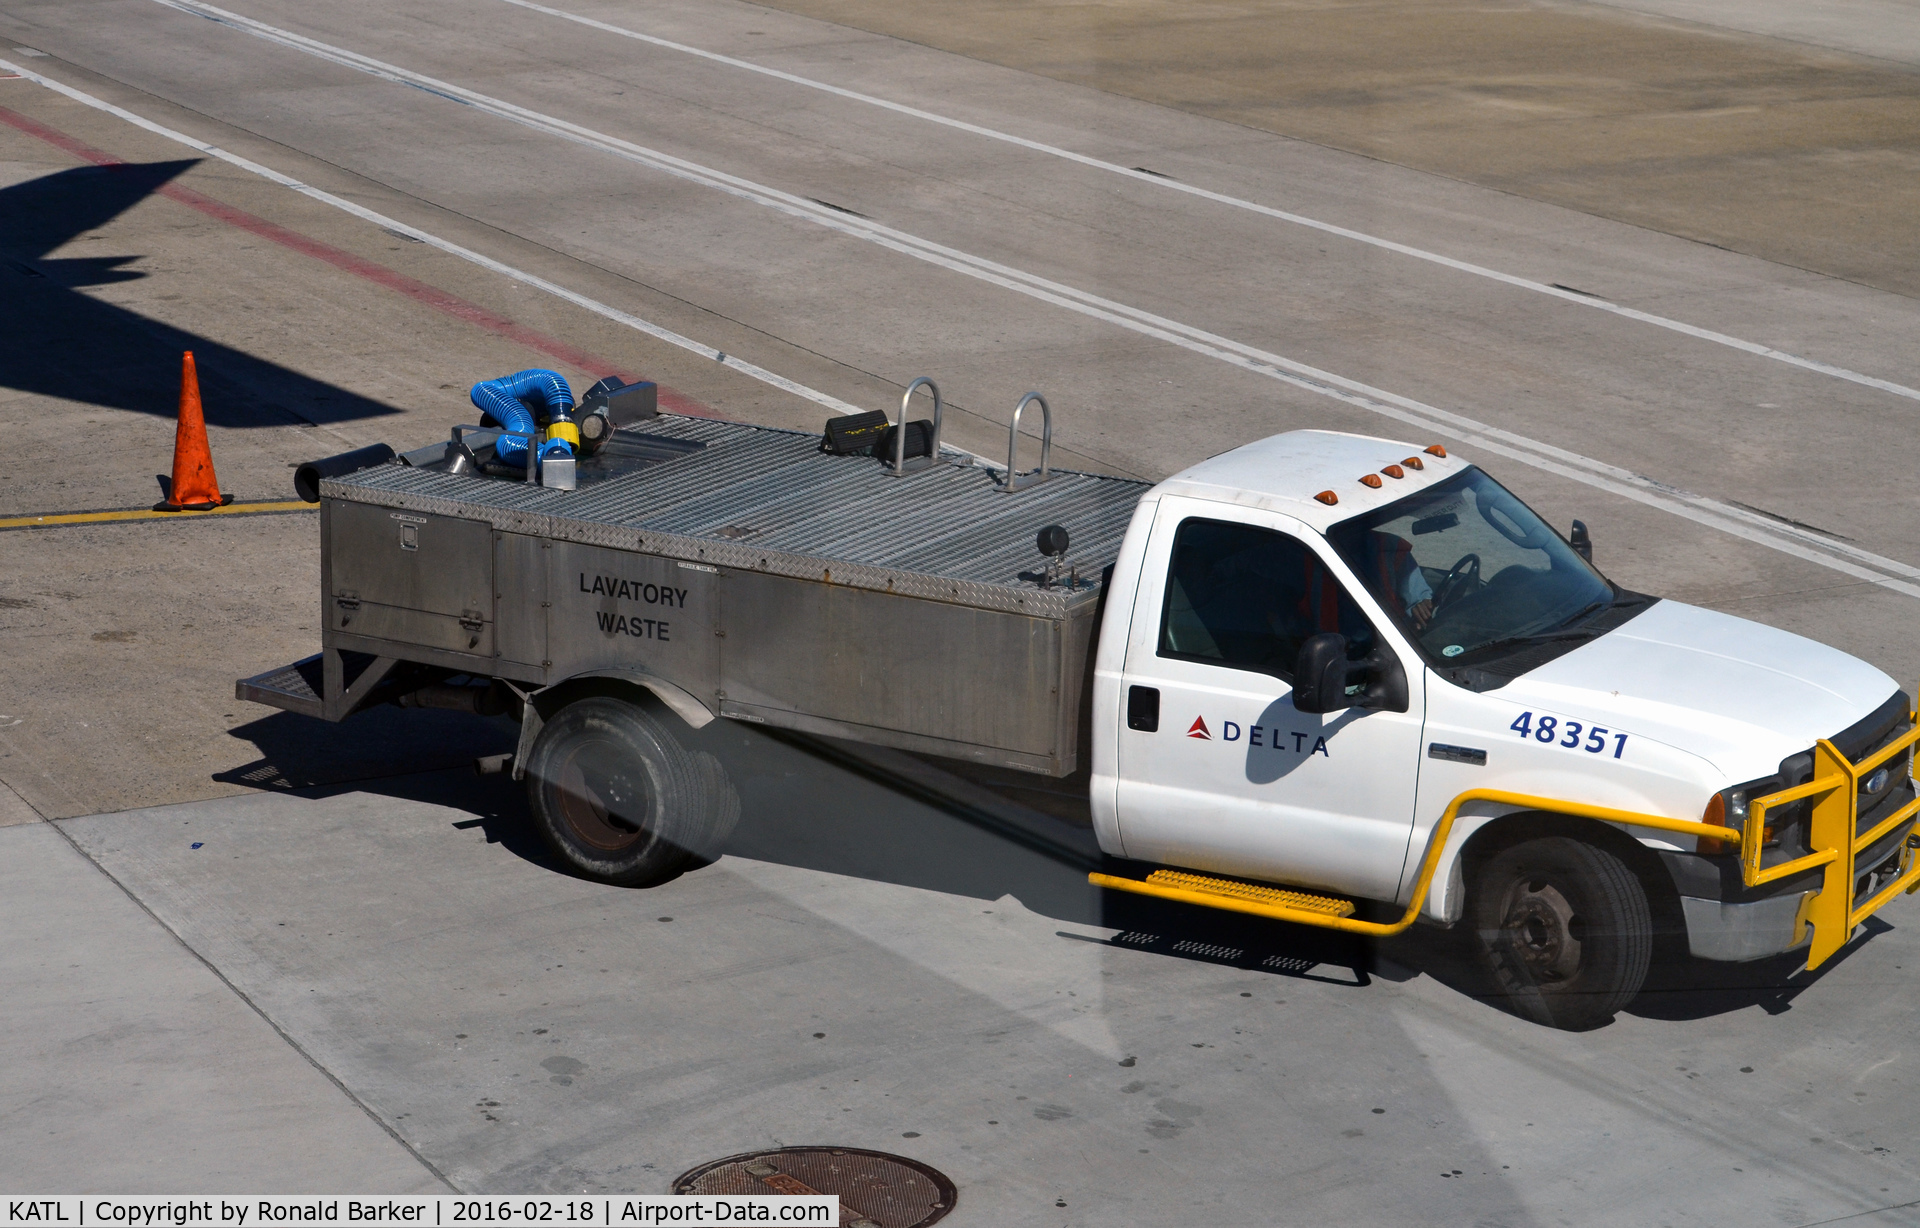 Hartsfield - Jackson Atlanta International Airport (ATL) - Delta Lavatory service vehicle 48351